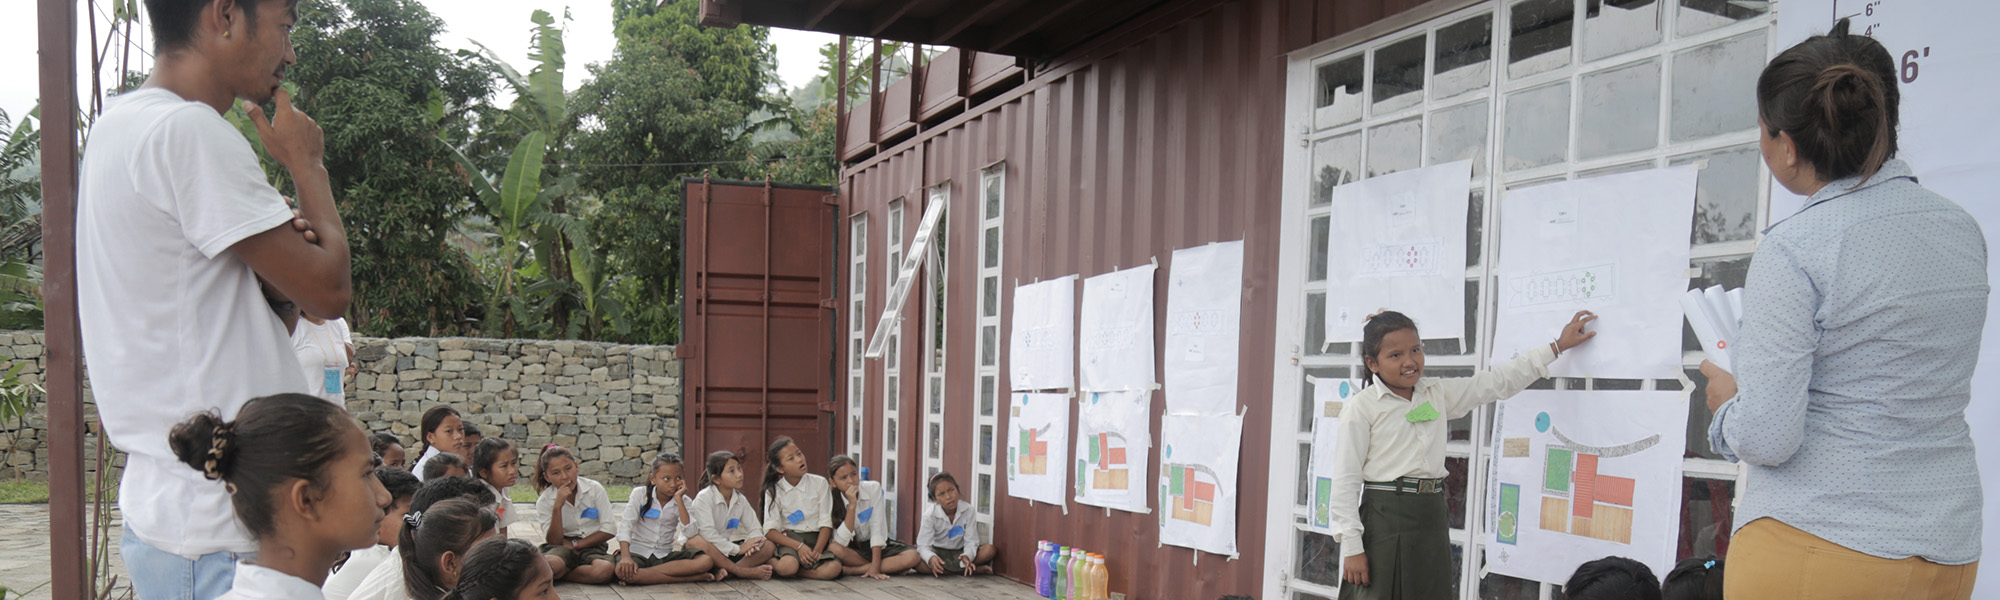 Architectural science alumna Priyanka Bista facilitates an outdoor class for sixth-grade students